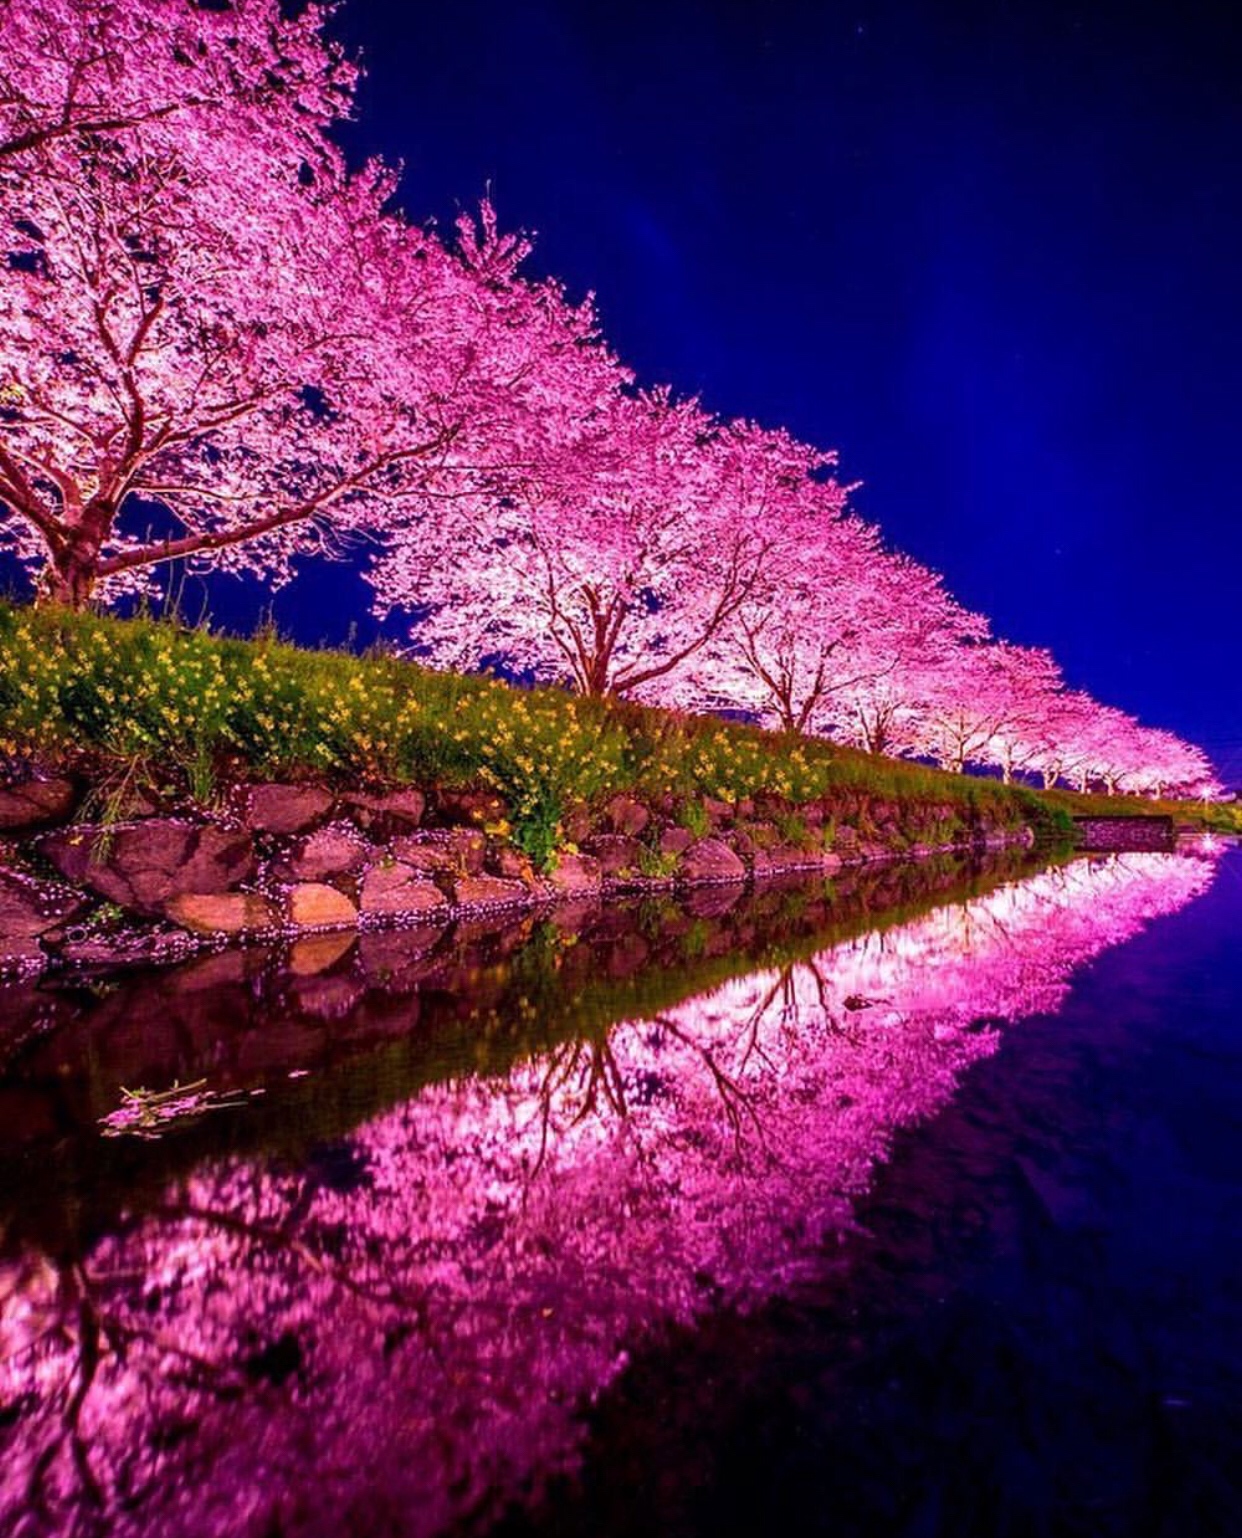 memes - cherry blossom night